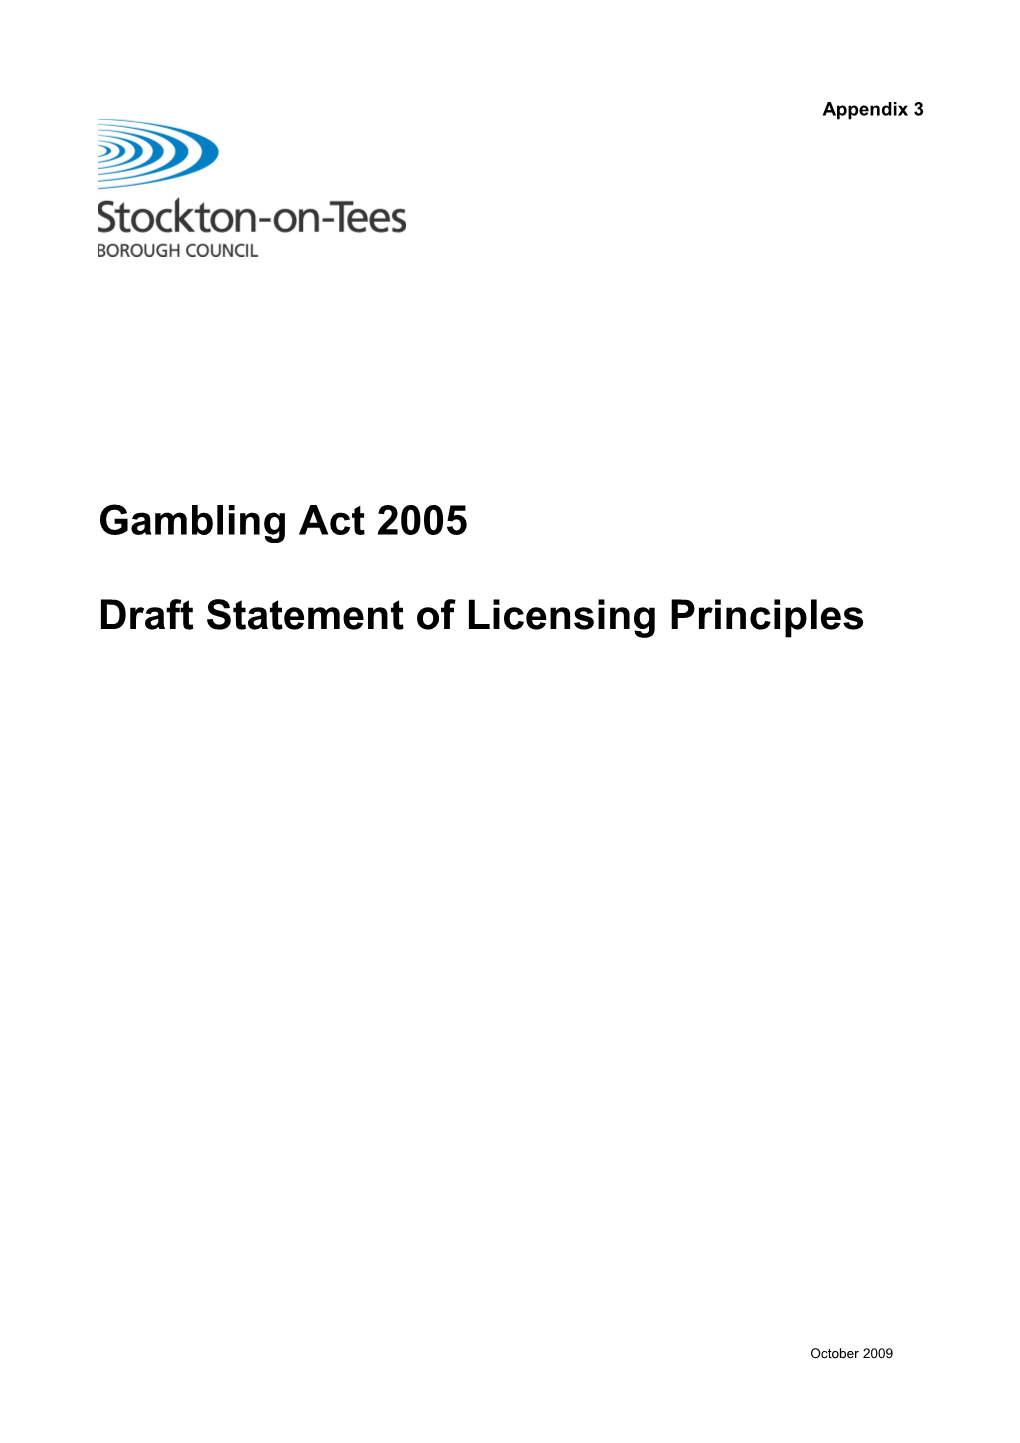 Draft Statement of Licensing Principles